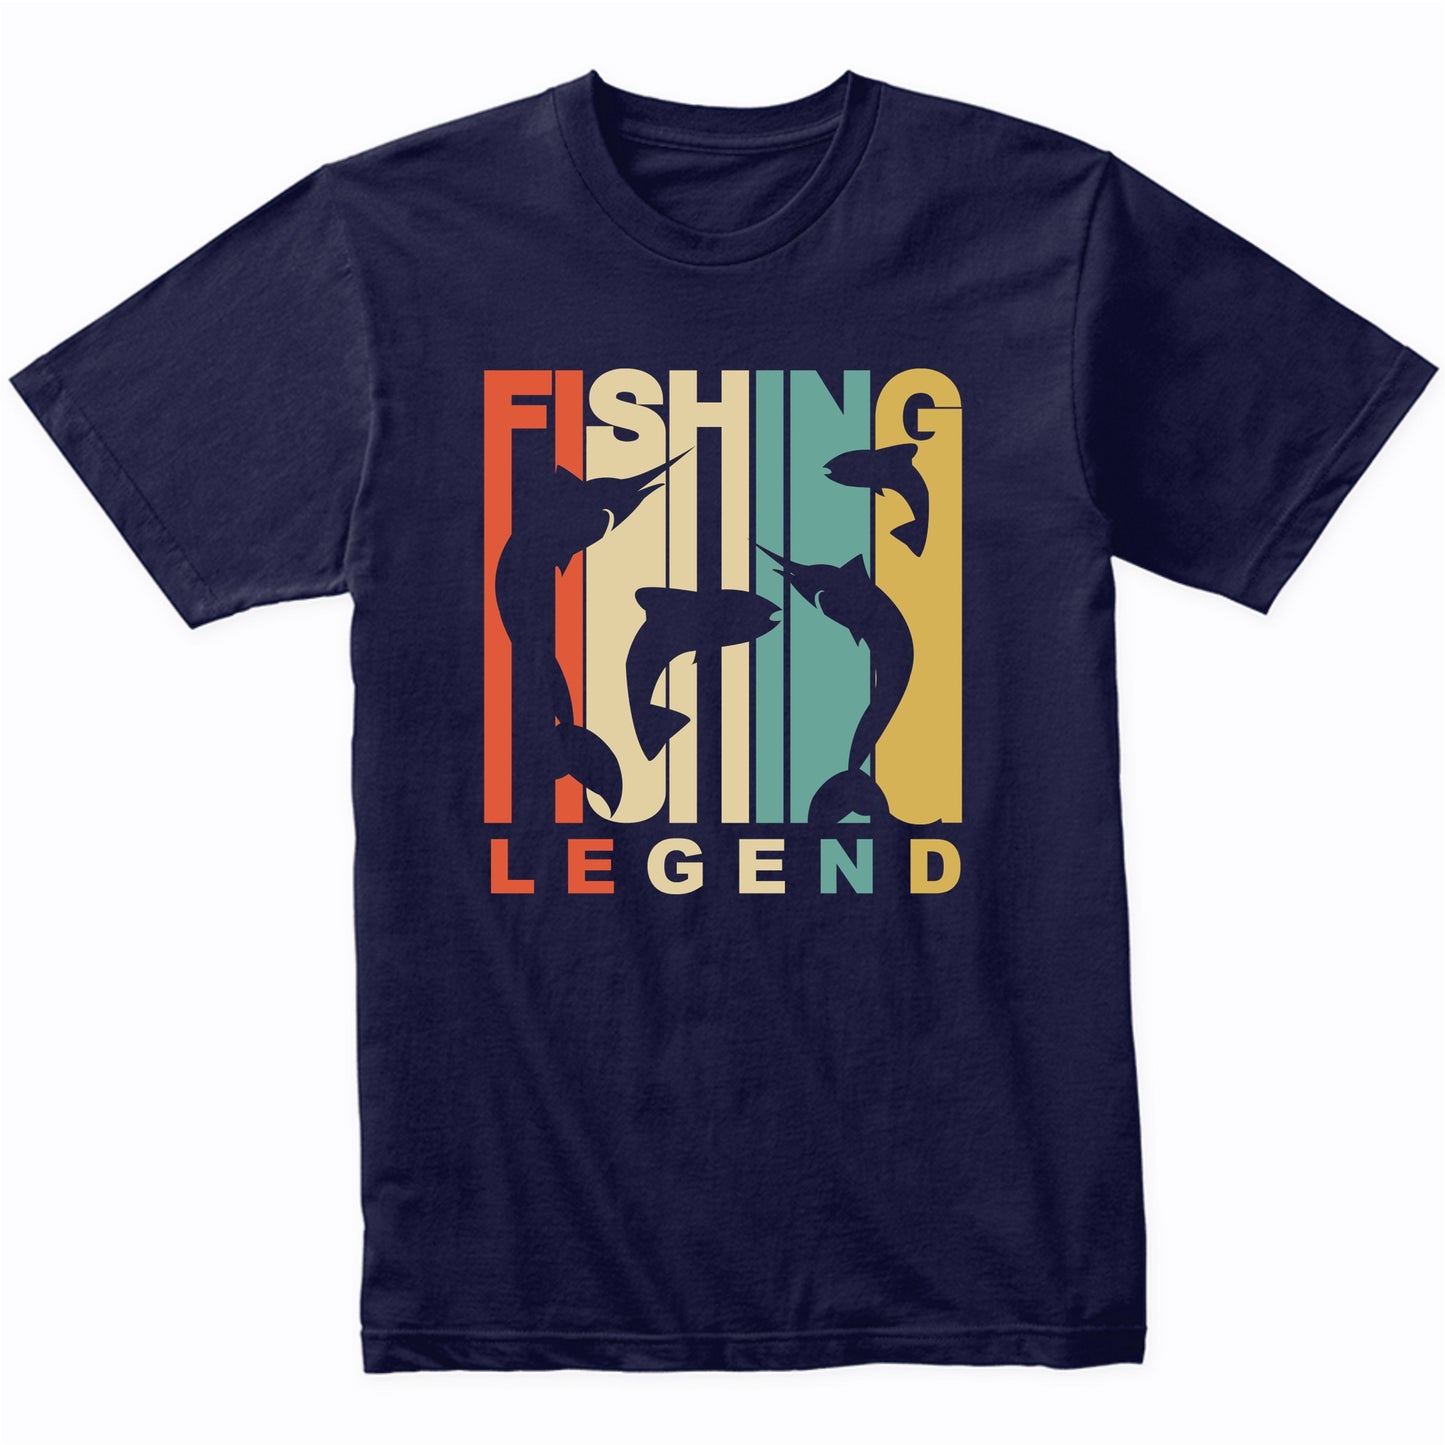 Vintage 1970's Style Fishing Legend Retro T-Shirt